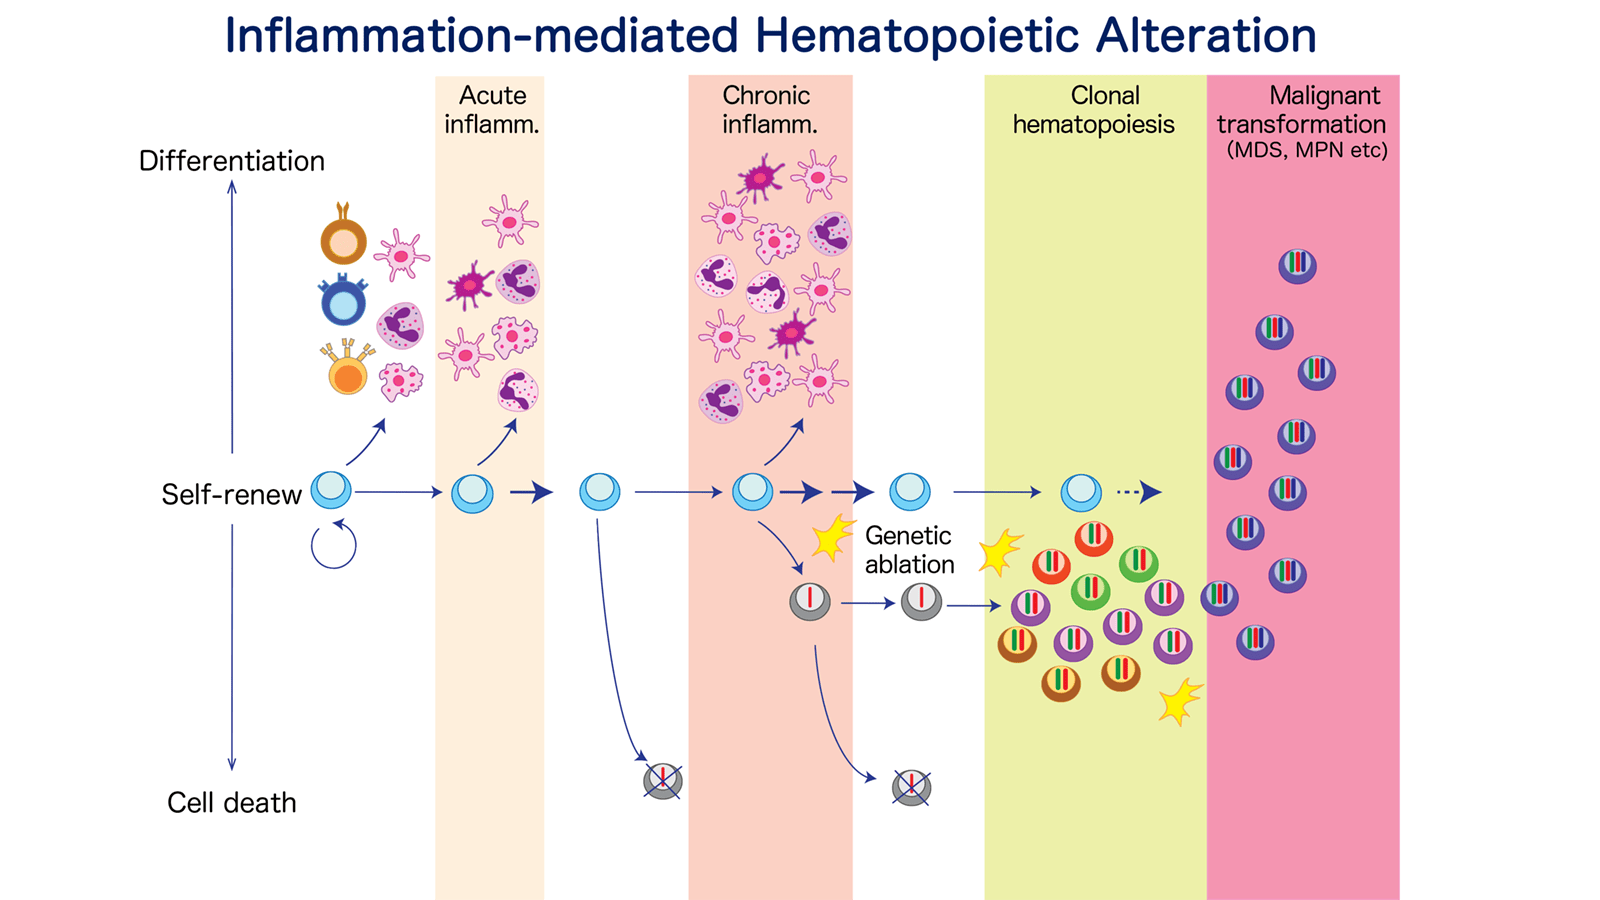 Inflammation-mediated Hematopoietic Alteration